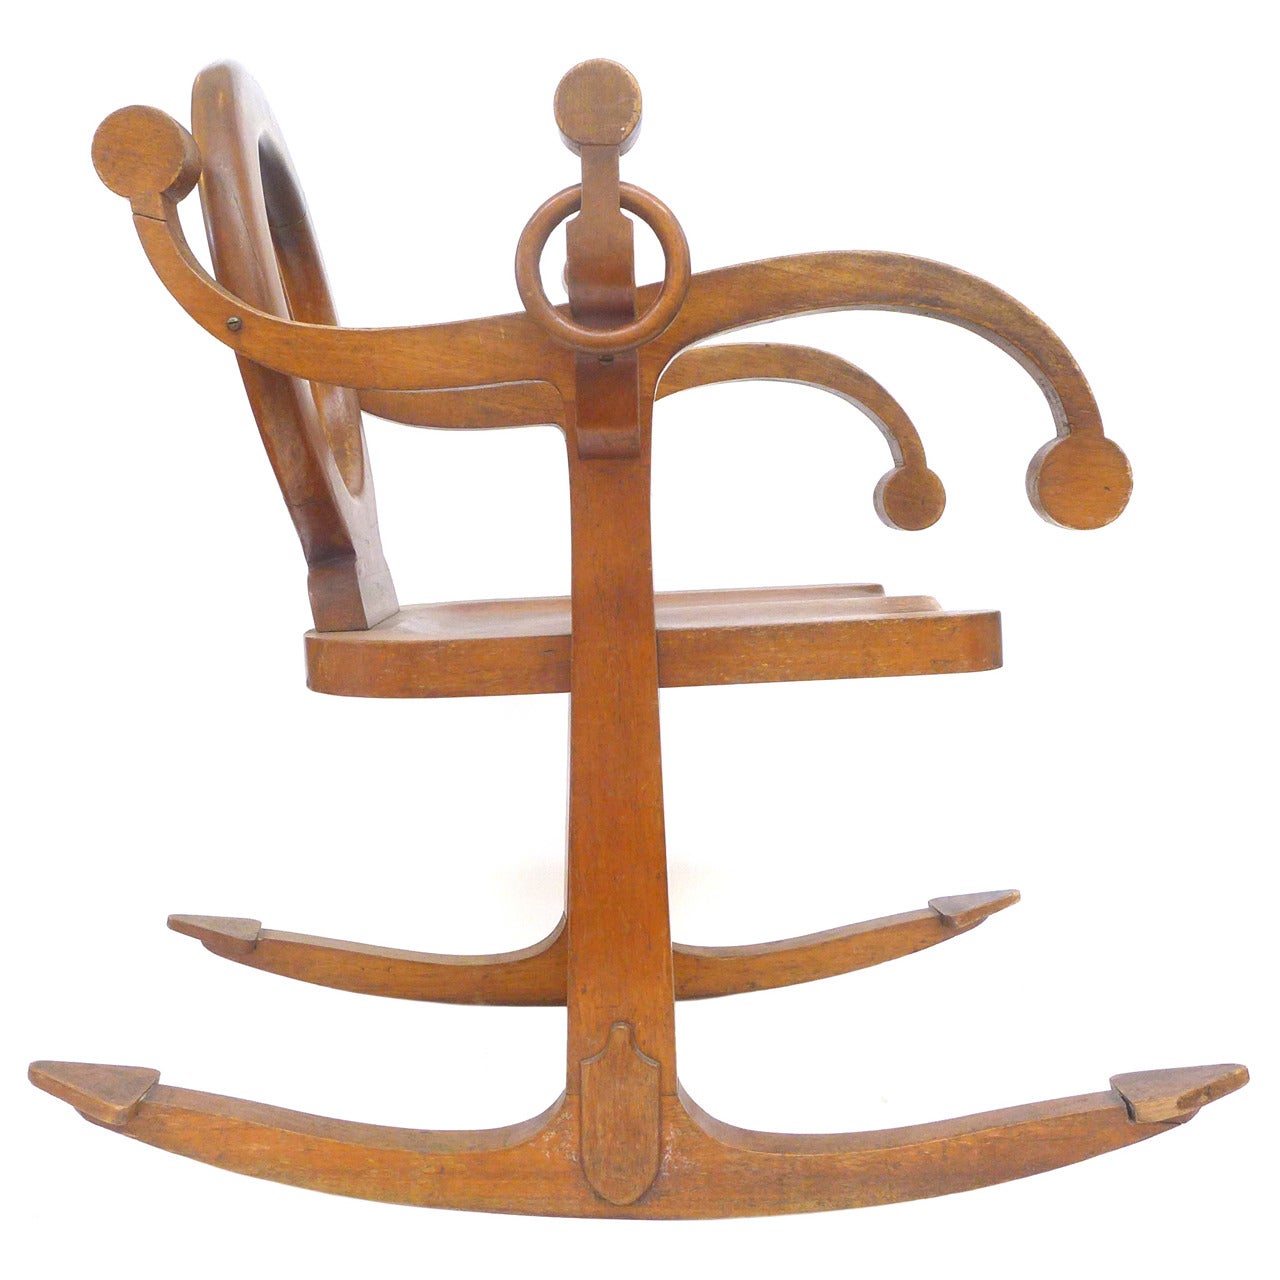 Unusual "Anchor" Rocking Chair